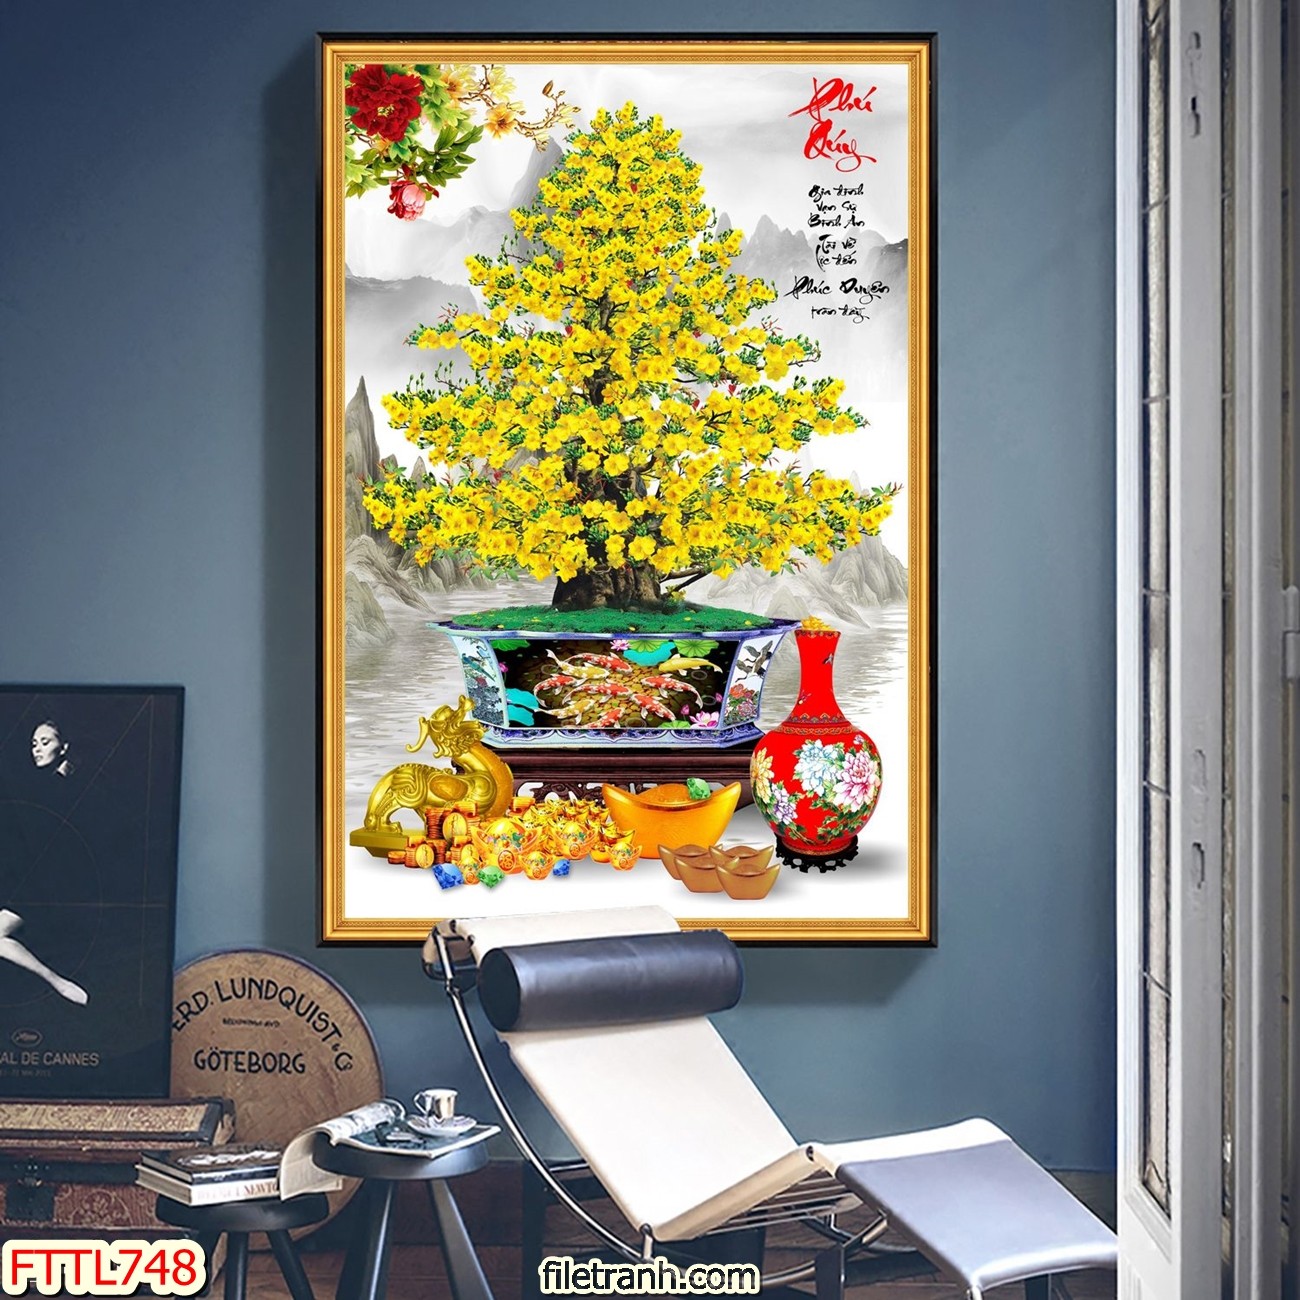 https://filetranh.com/file-tranh-chau-mai-bonsai/file-tranh-chau-mai-bonsai-fttl748.html